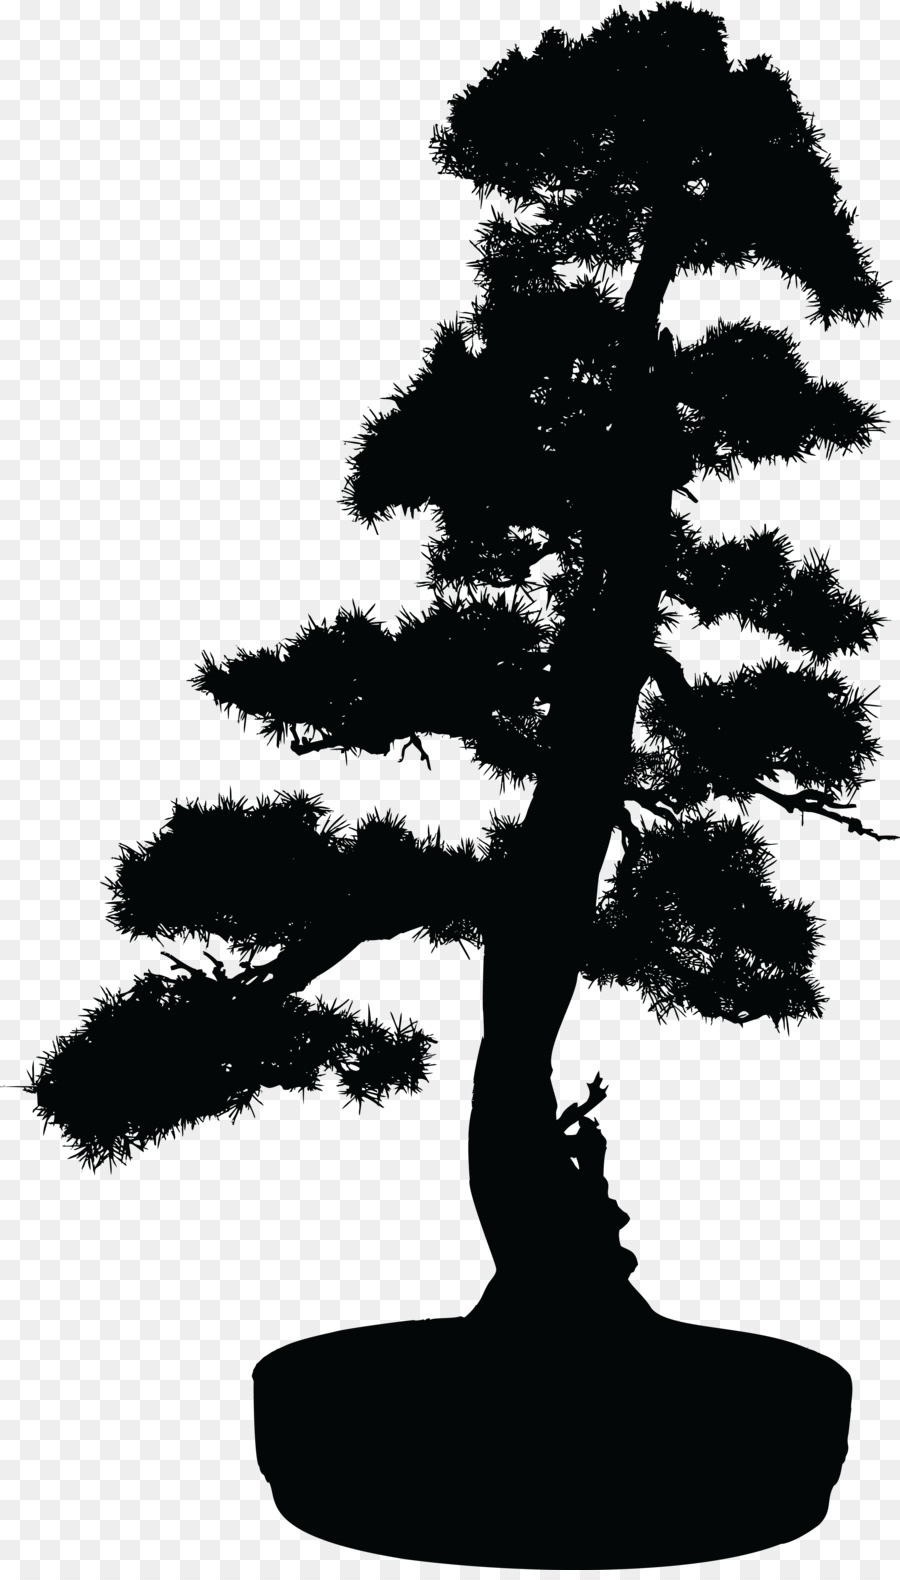 Bonsai Tree Silhouette Clip art - tree png download - 4000*6977 - Free Transparent Bonsai png Download.